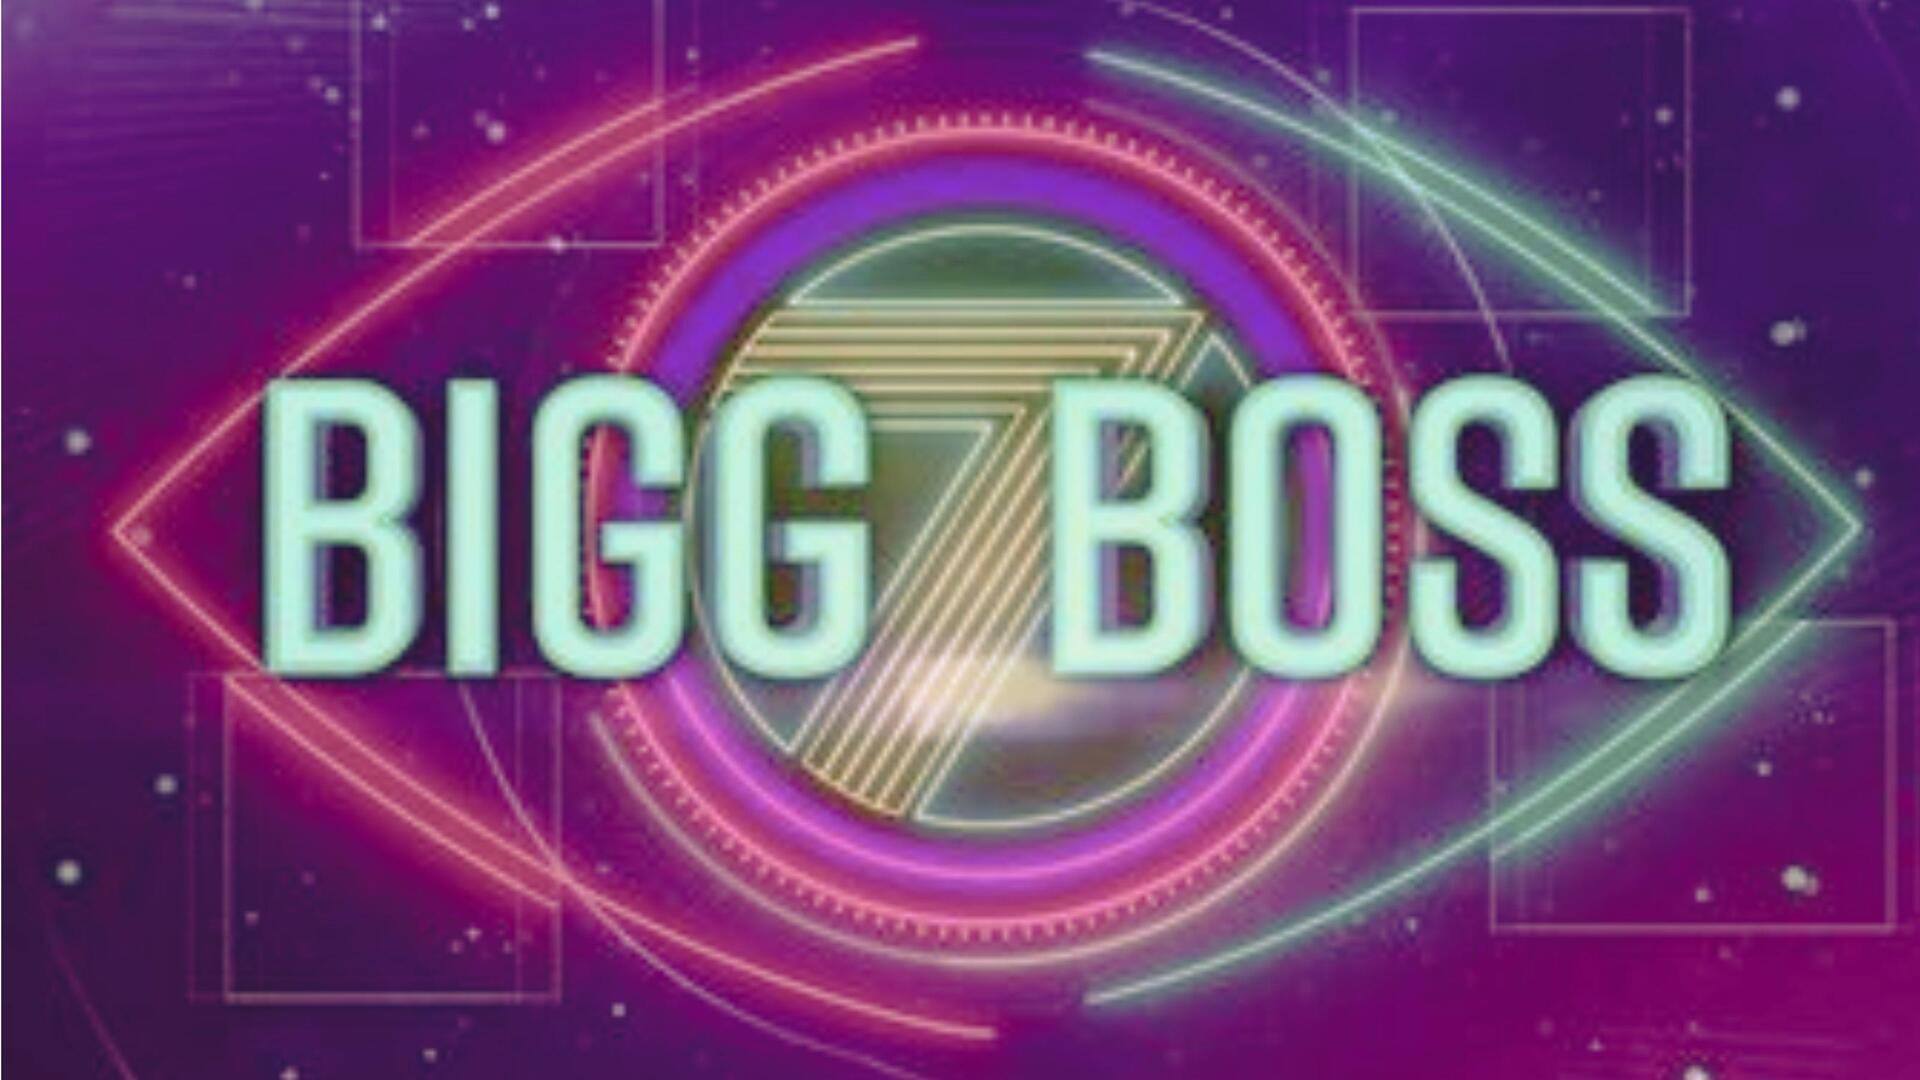 Bigg boss 7: బిగ్‌బాస్-7 వివాదం.. నటిపై కంటెస్టెంట్ అభిమానుల దాడి